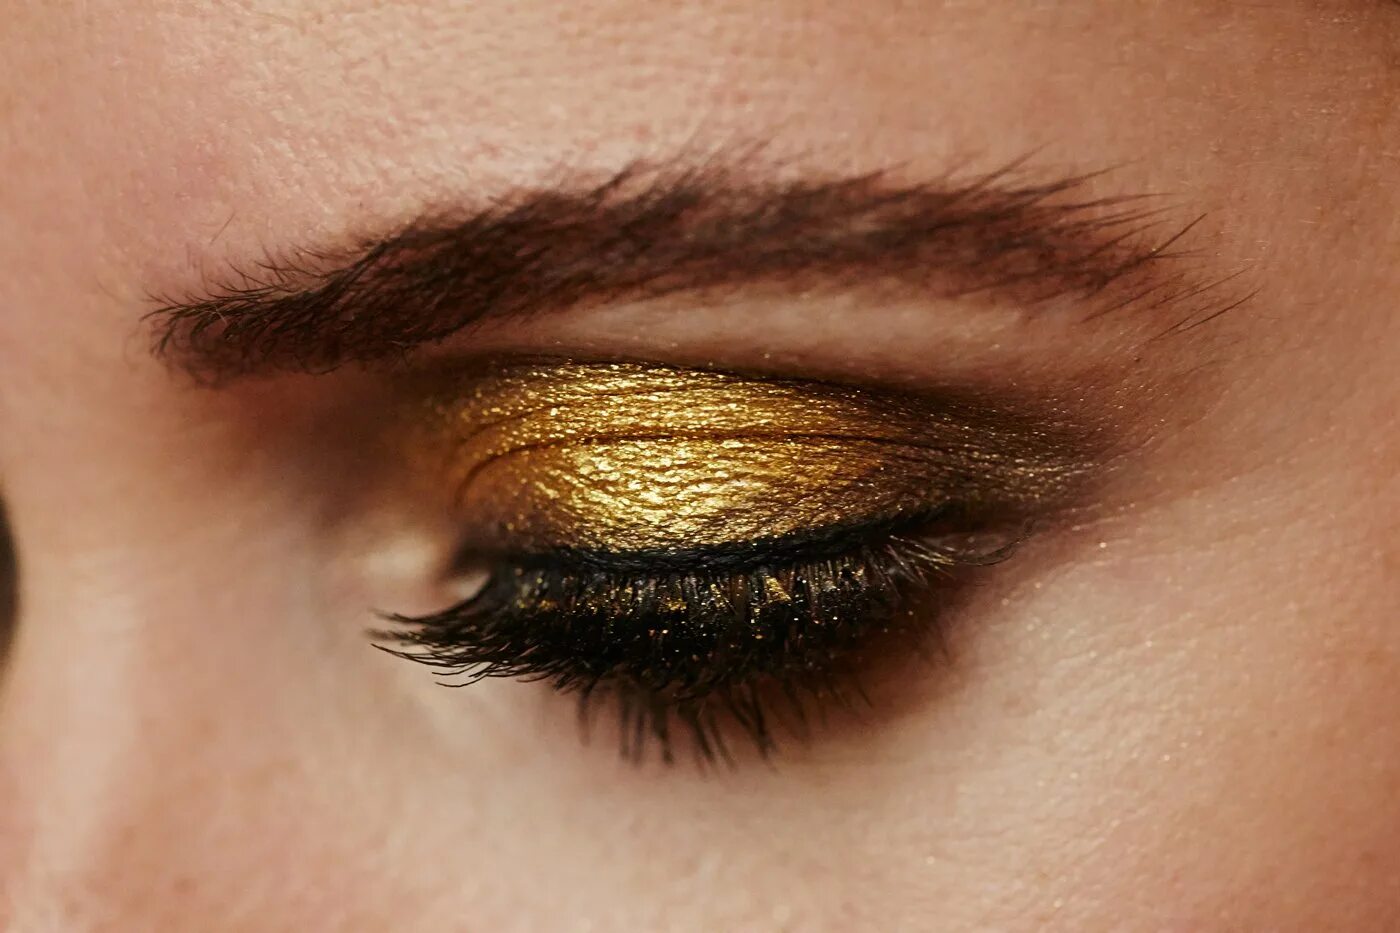 Тени gold. Макияж с золотыми тенями. Макияж глаз с золотыми тенями. Золотисто бронзовый макияж глаз. Макияж век в золотистых тонах.